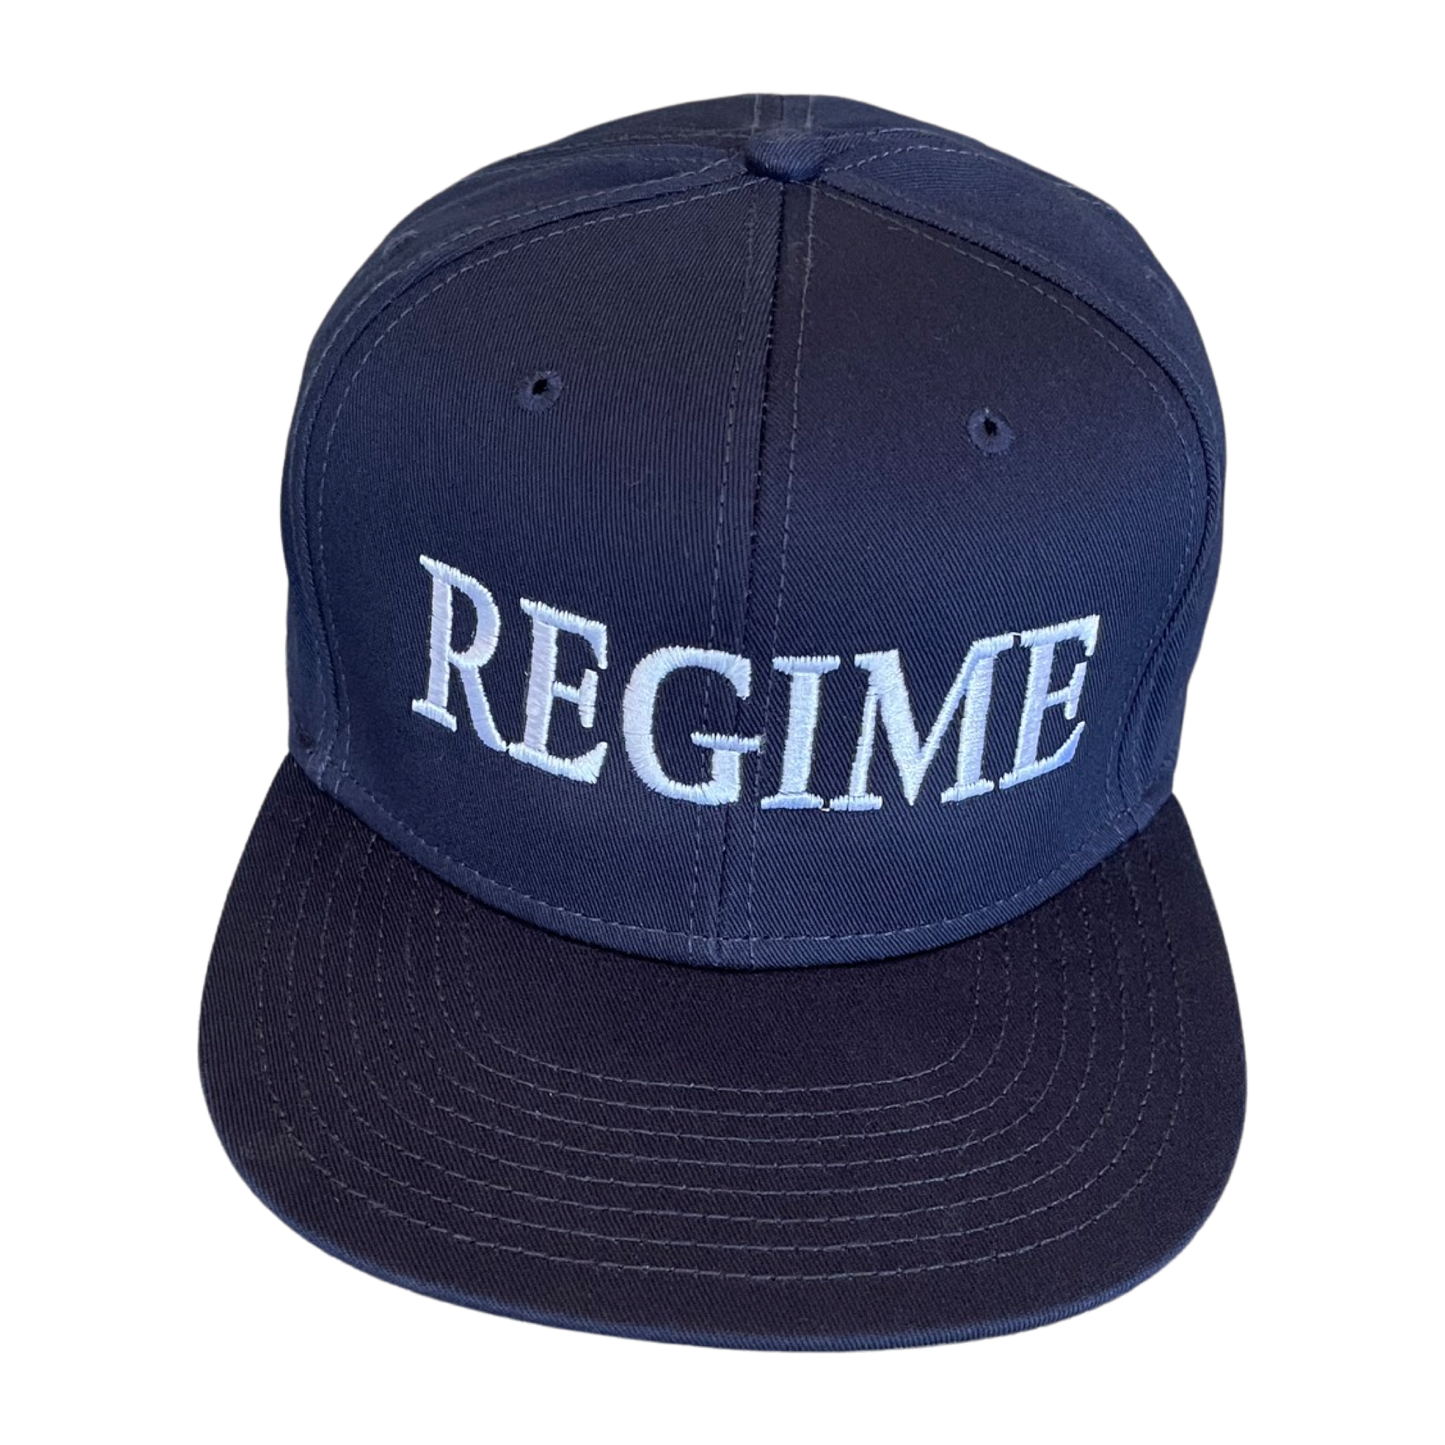 Regime Snapback Hat - Navy